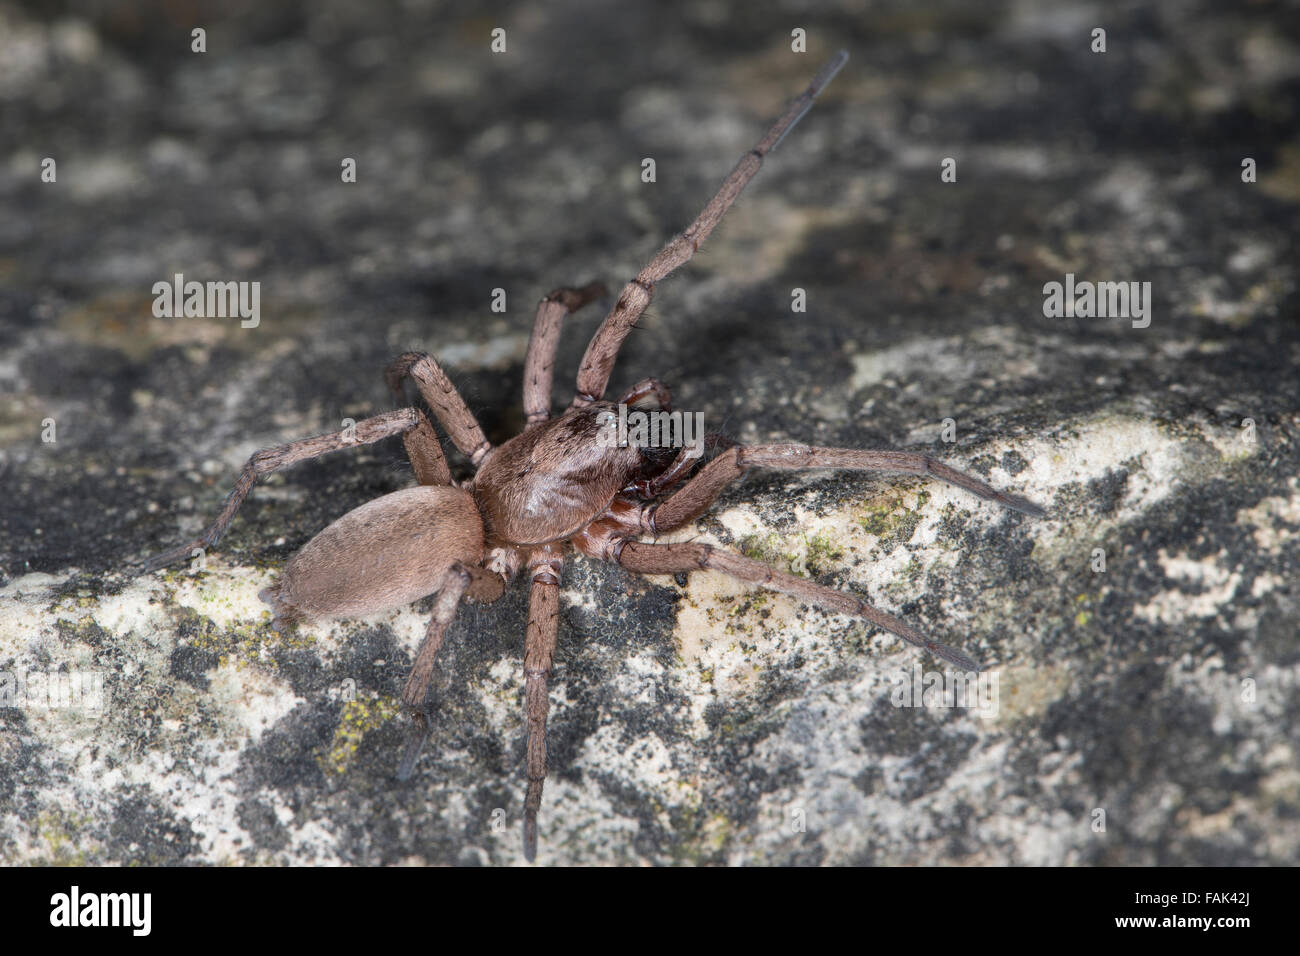 Massa spider, Caccia spider, Plattbauchspinne, Plattbauch-Spinne, Glattbauchspinne, Drassodes sp., Gnaphosidae Foto Stock